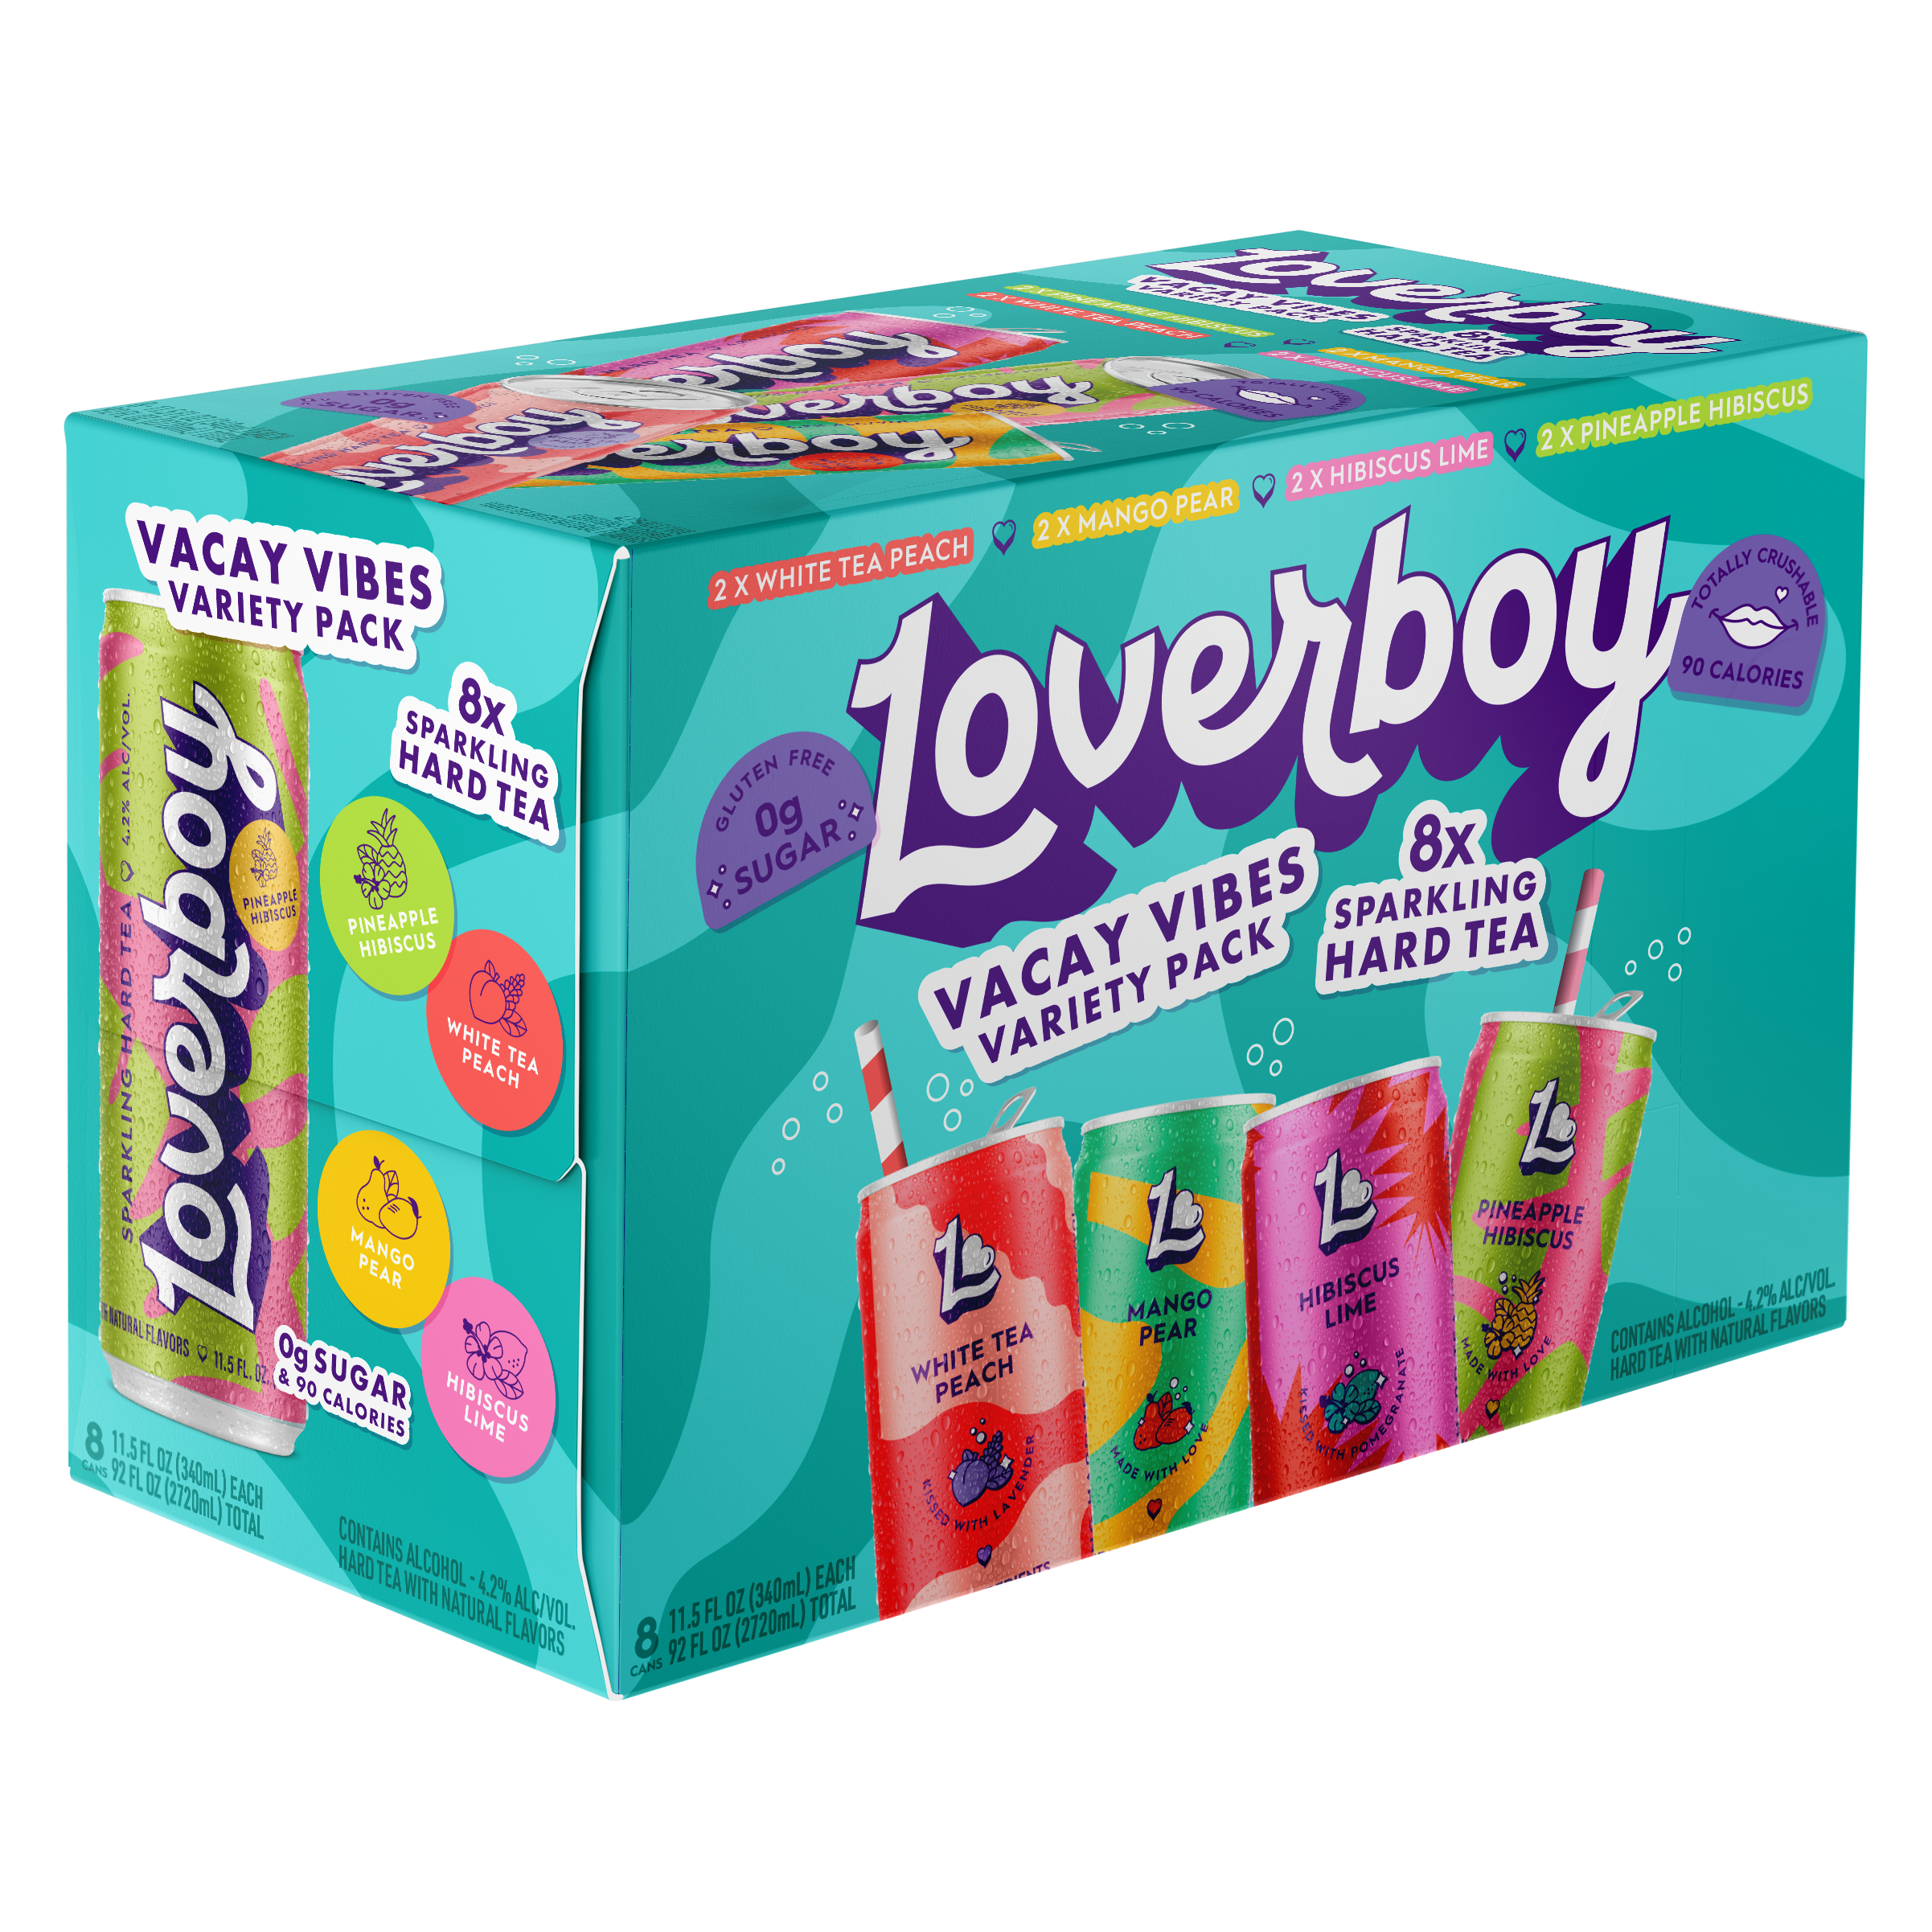 Loverboy Vacay Vibes Variety Pack 8pk